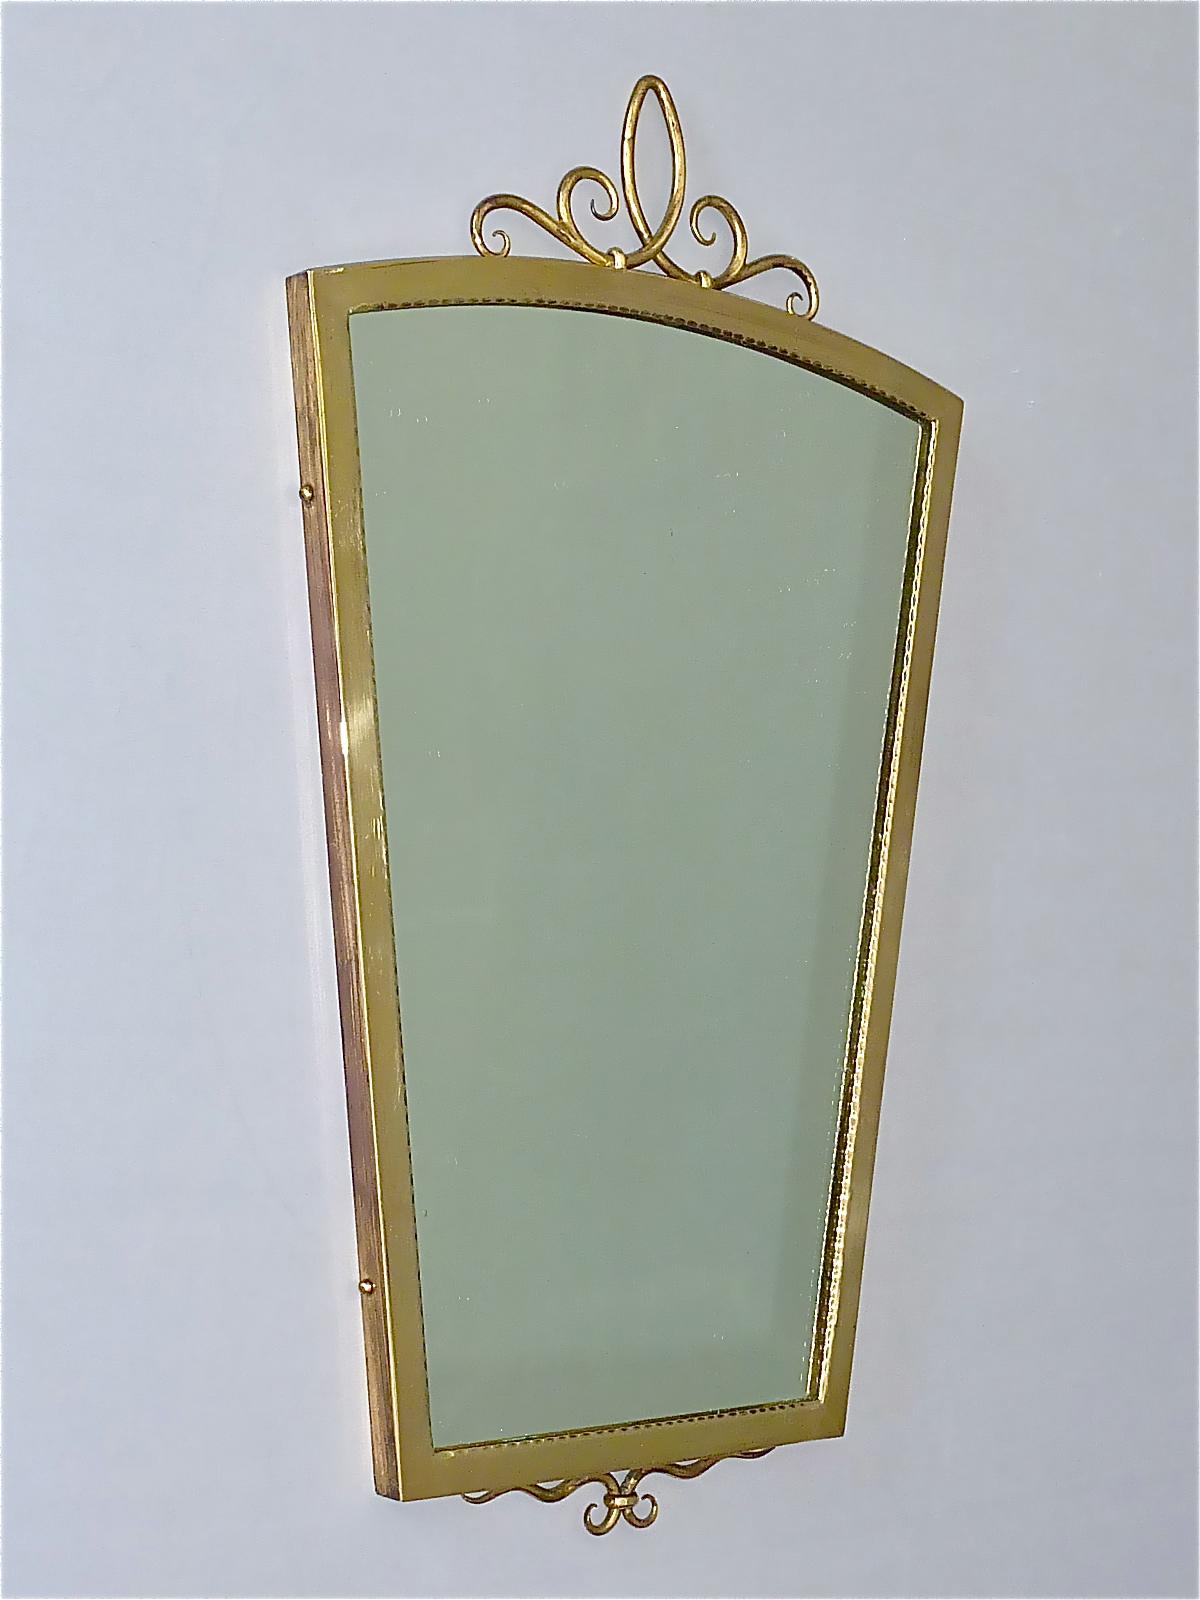 Rare Midcentury Gio Ponti attribution Italian Wall Mirror Gilt Brass Glass 1950s For Sale 1